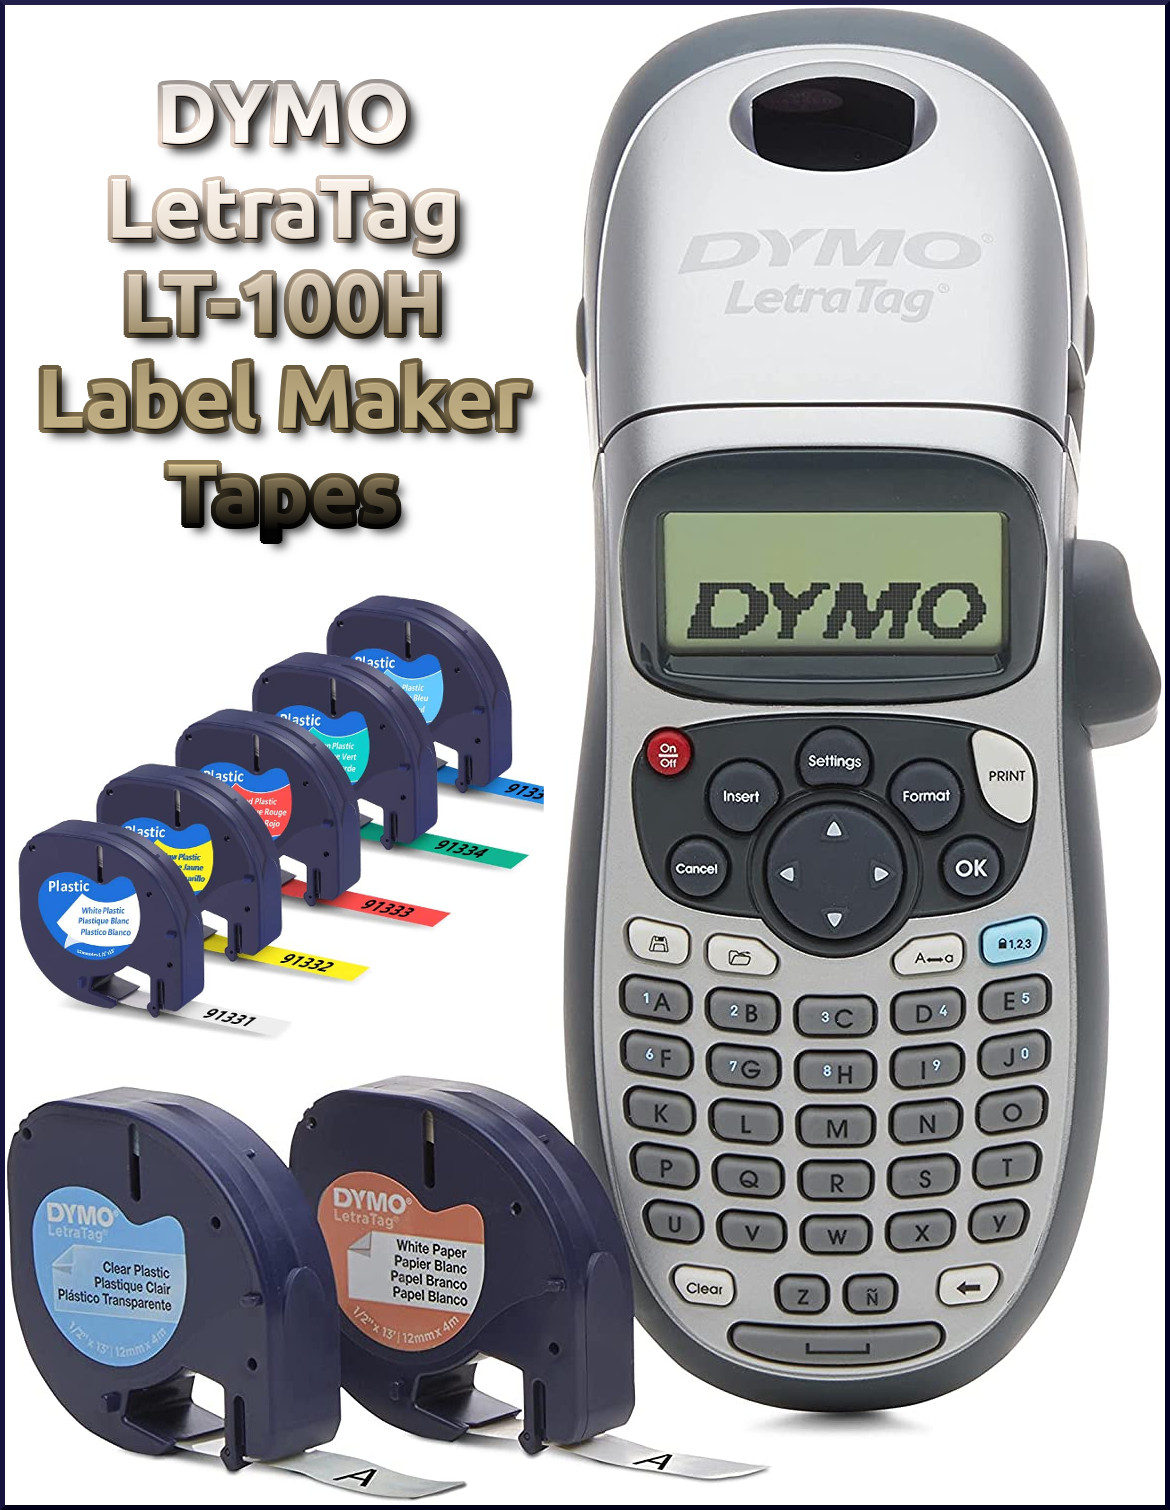 DYMO LetraTag LT-100H Label Maker Accessories